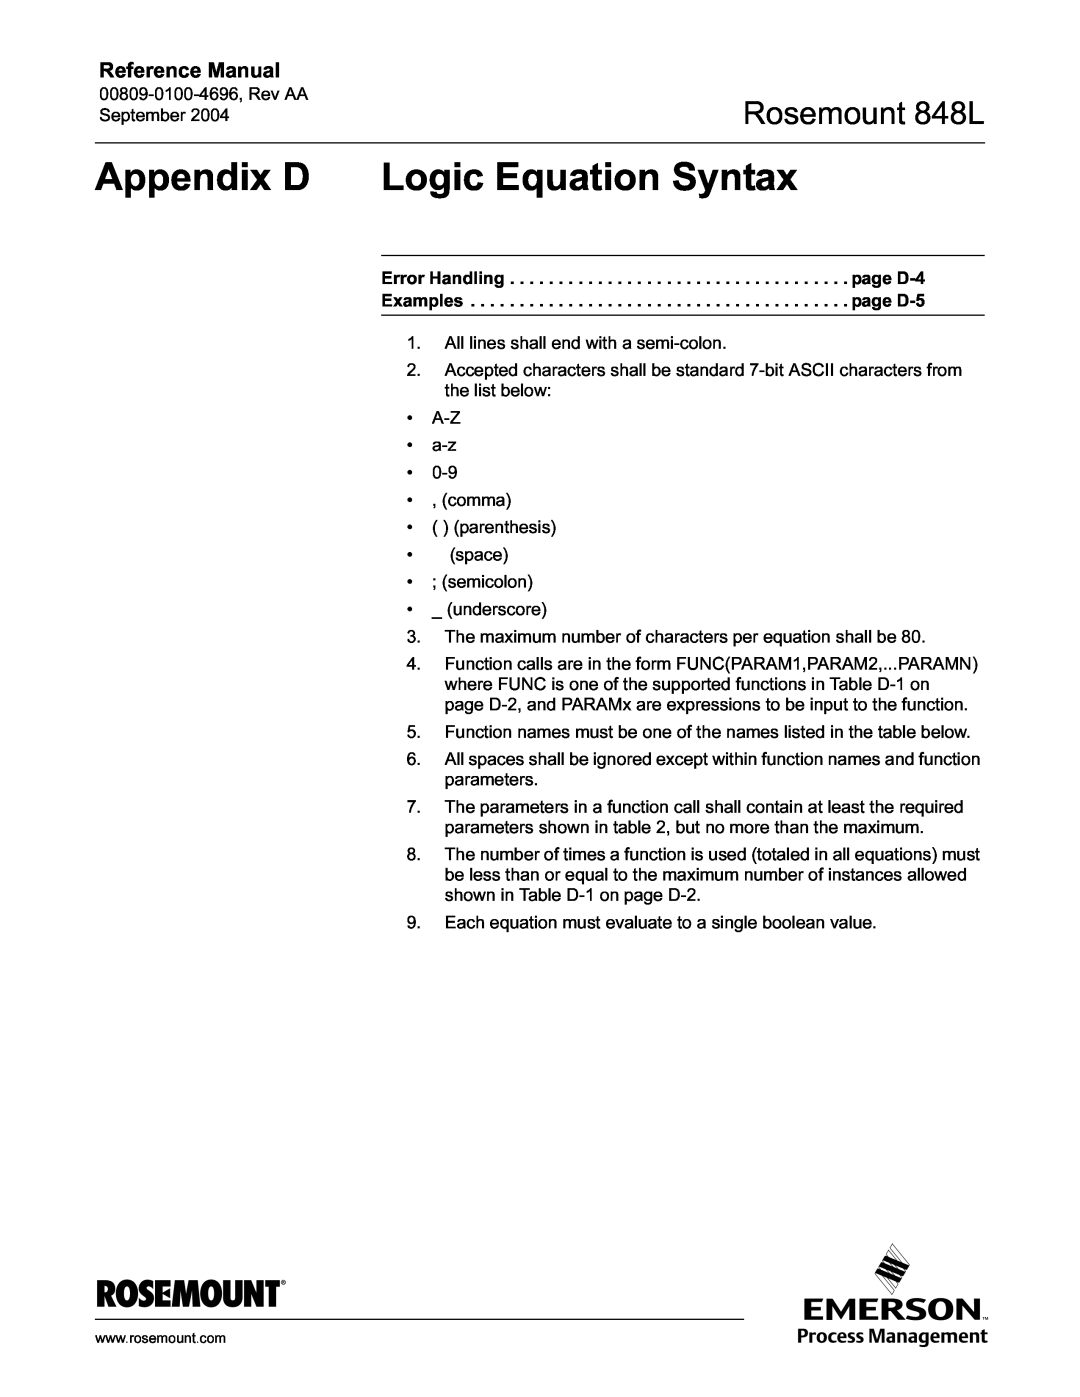 Emerson manual Appendix D Logic Equation Syntax, Rosemount 848L, Reference Manual 